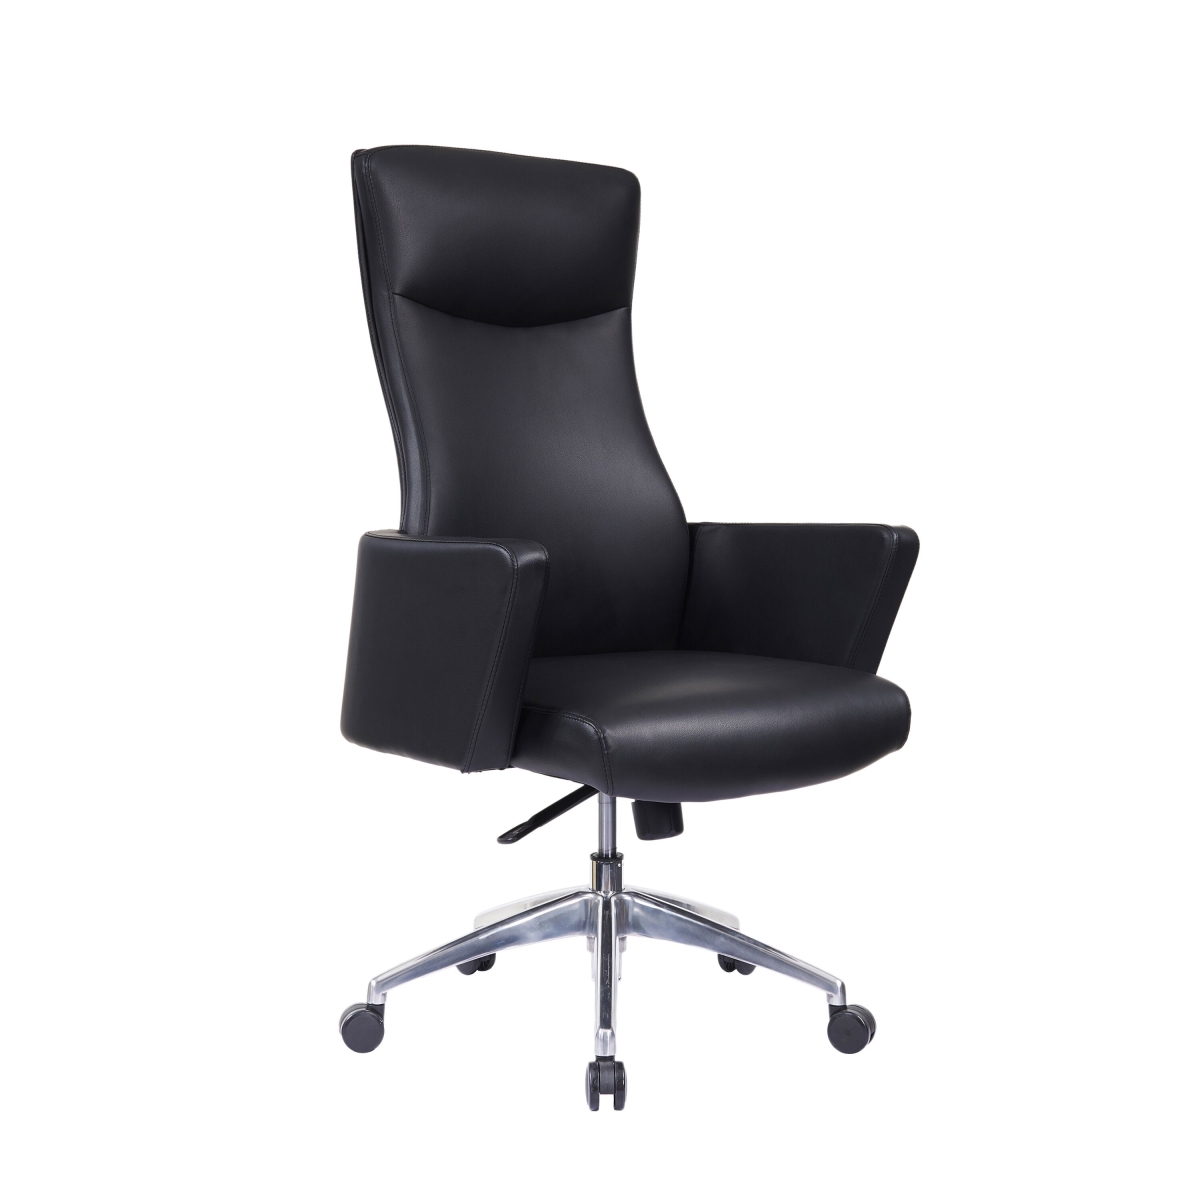 Rta-1011-bk High Back Executive Chair, Black - 27.5 X 27 X 45.5 To 48.5 In.